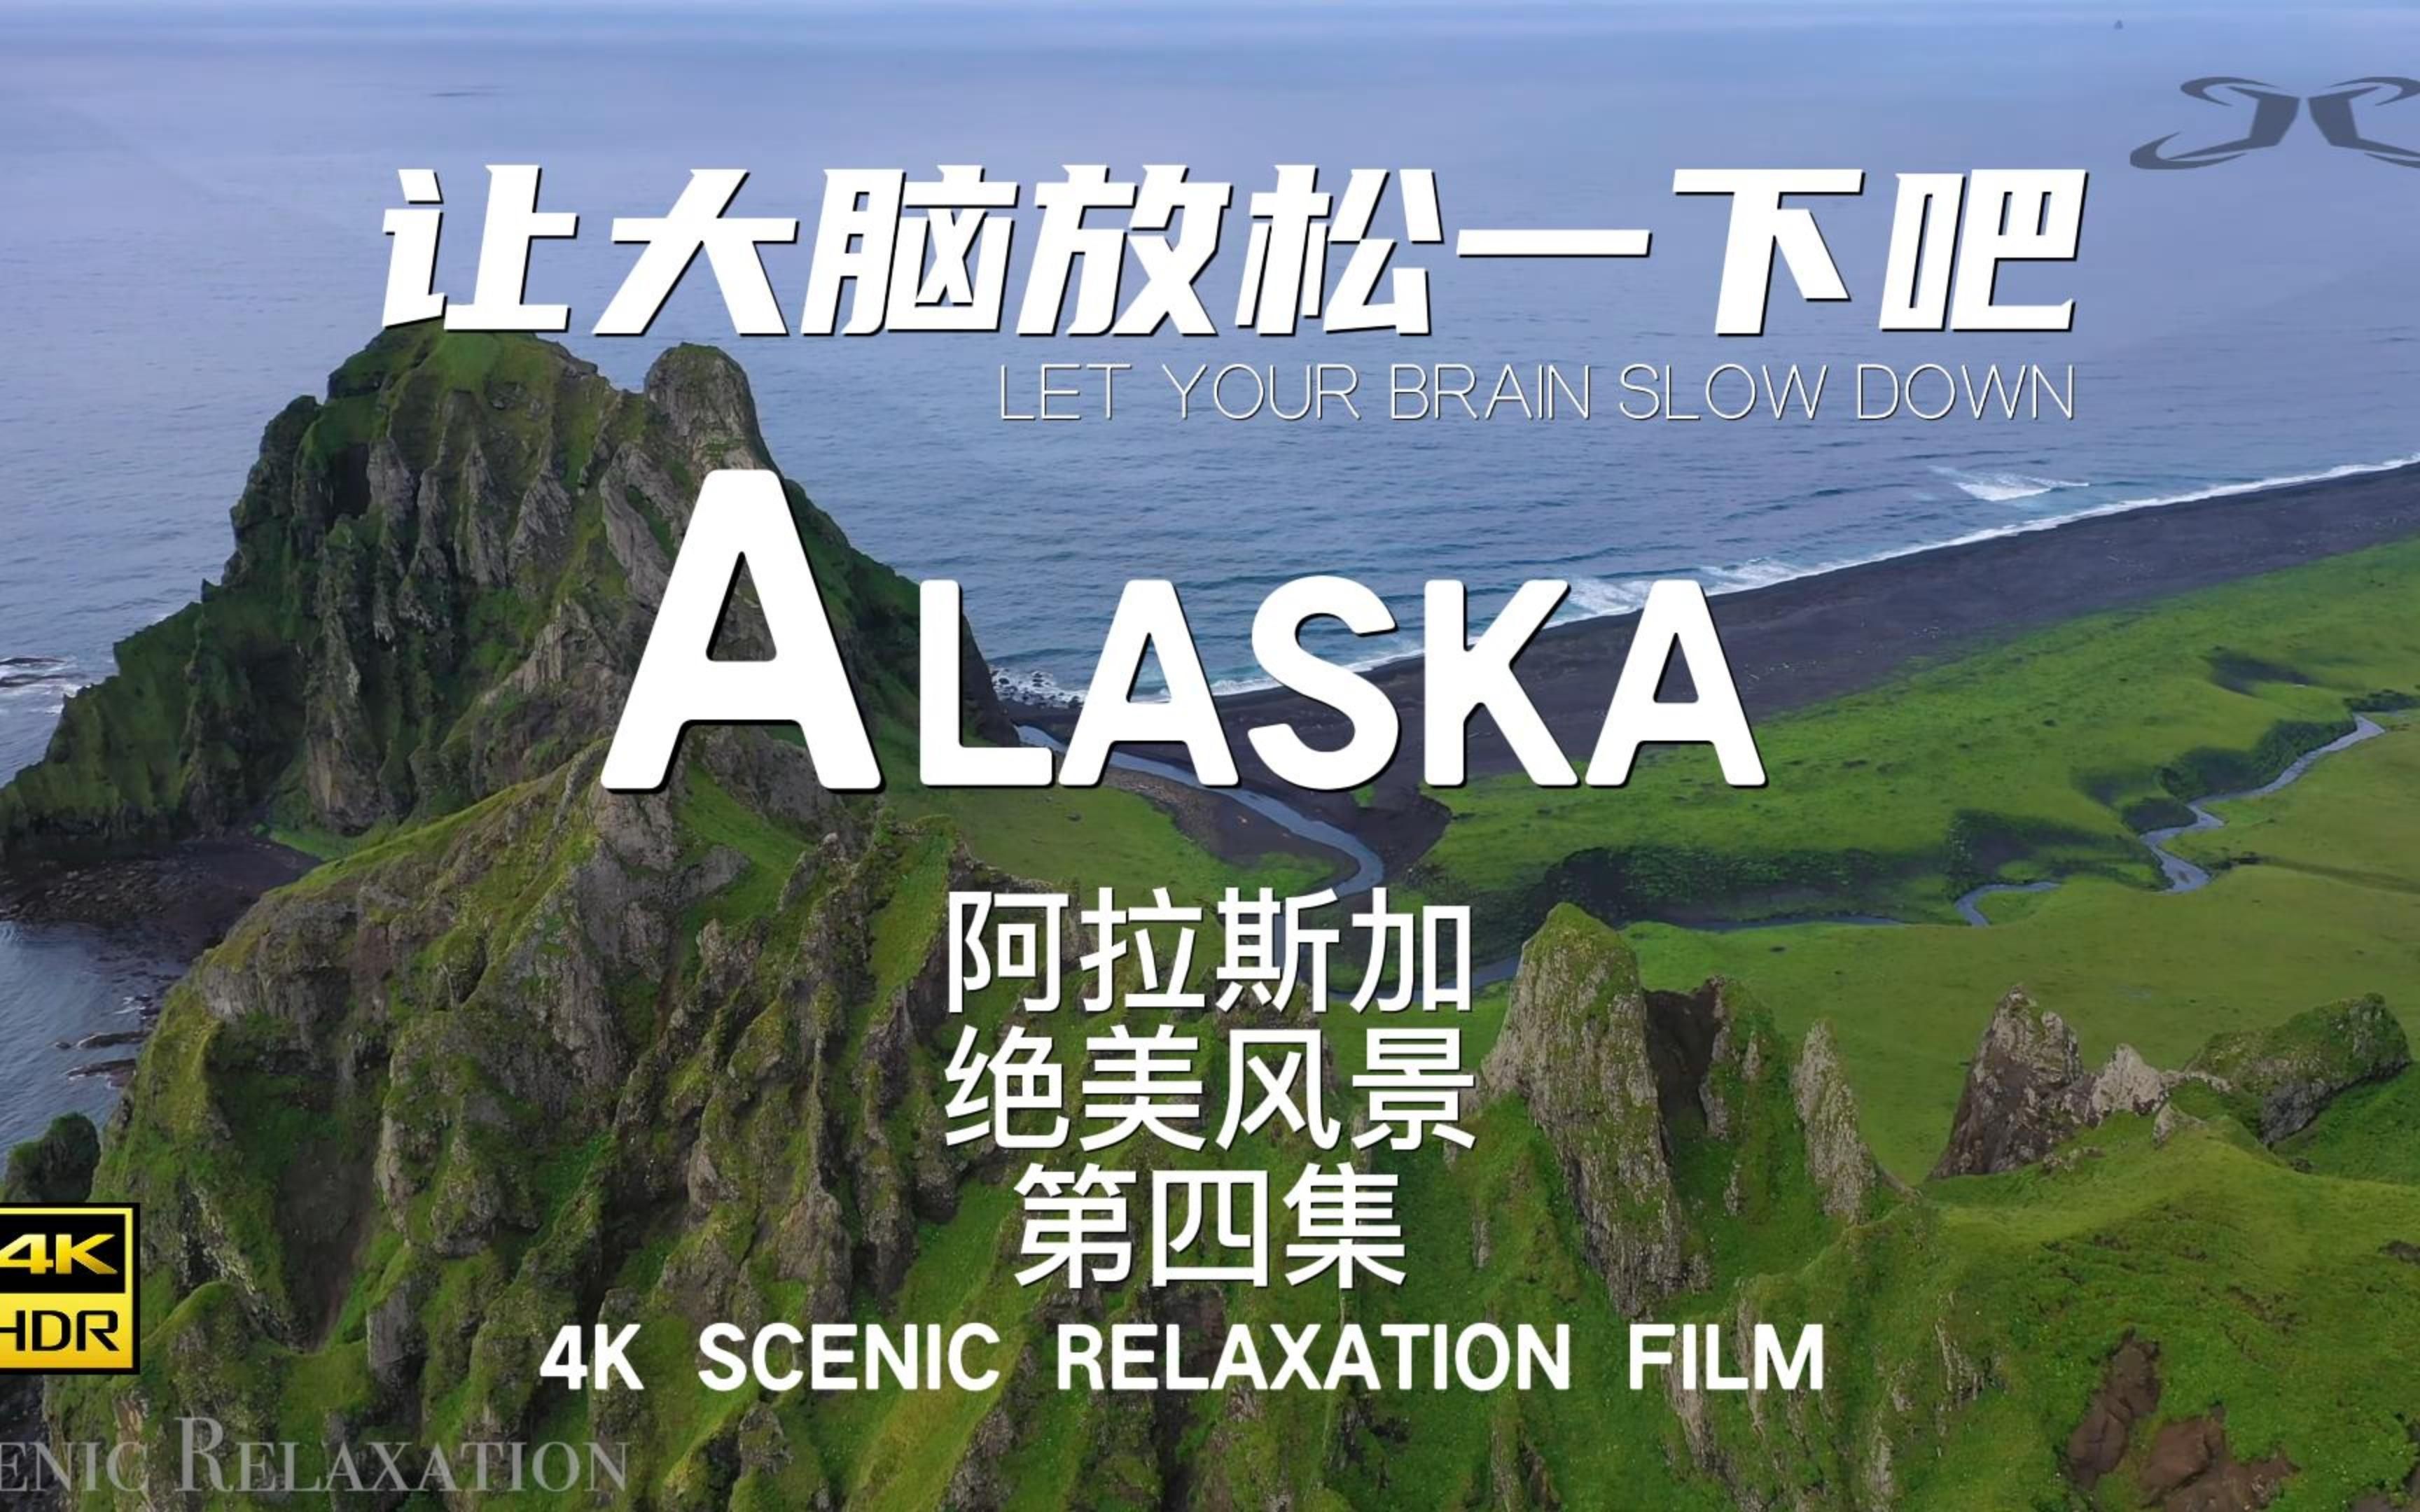 【4K】阿拉斯加自然放松解压助眠鸟瞰阿拉斯加第四集